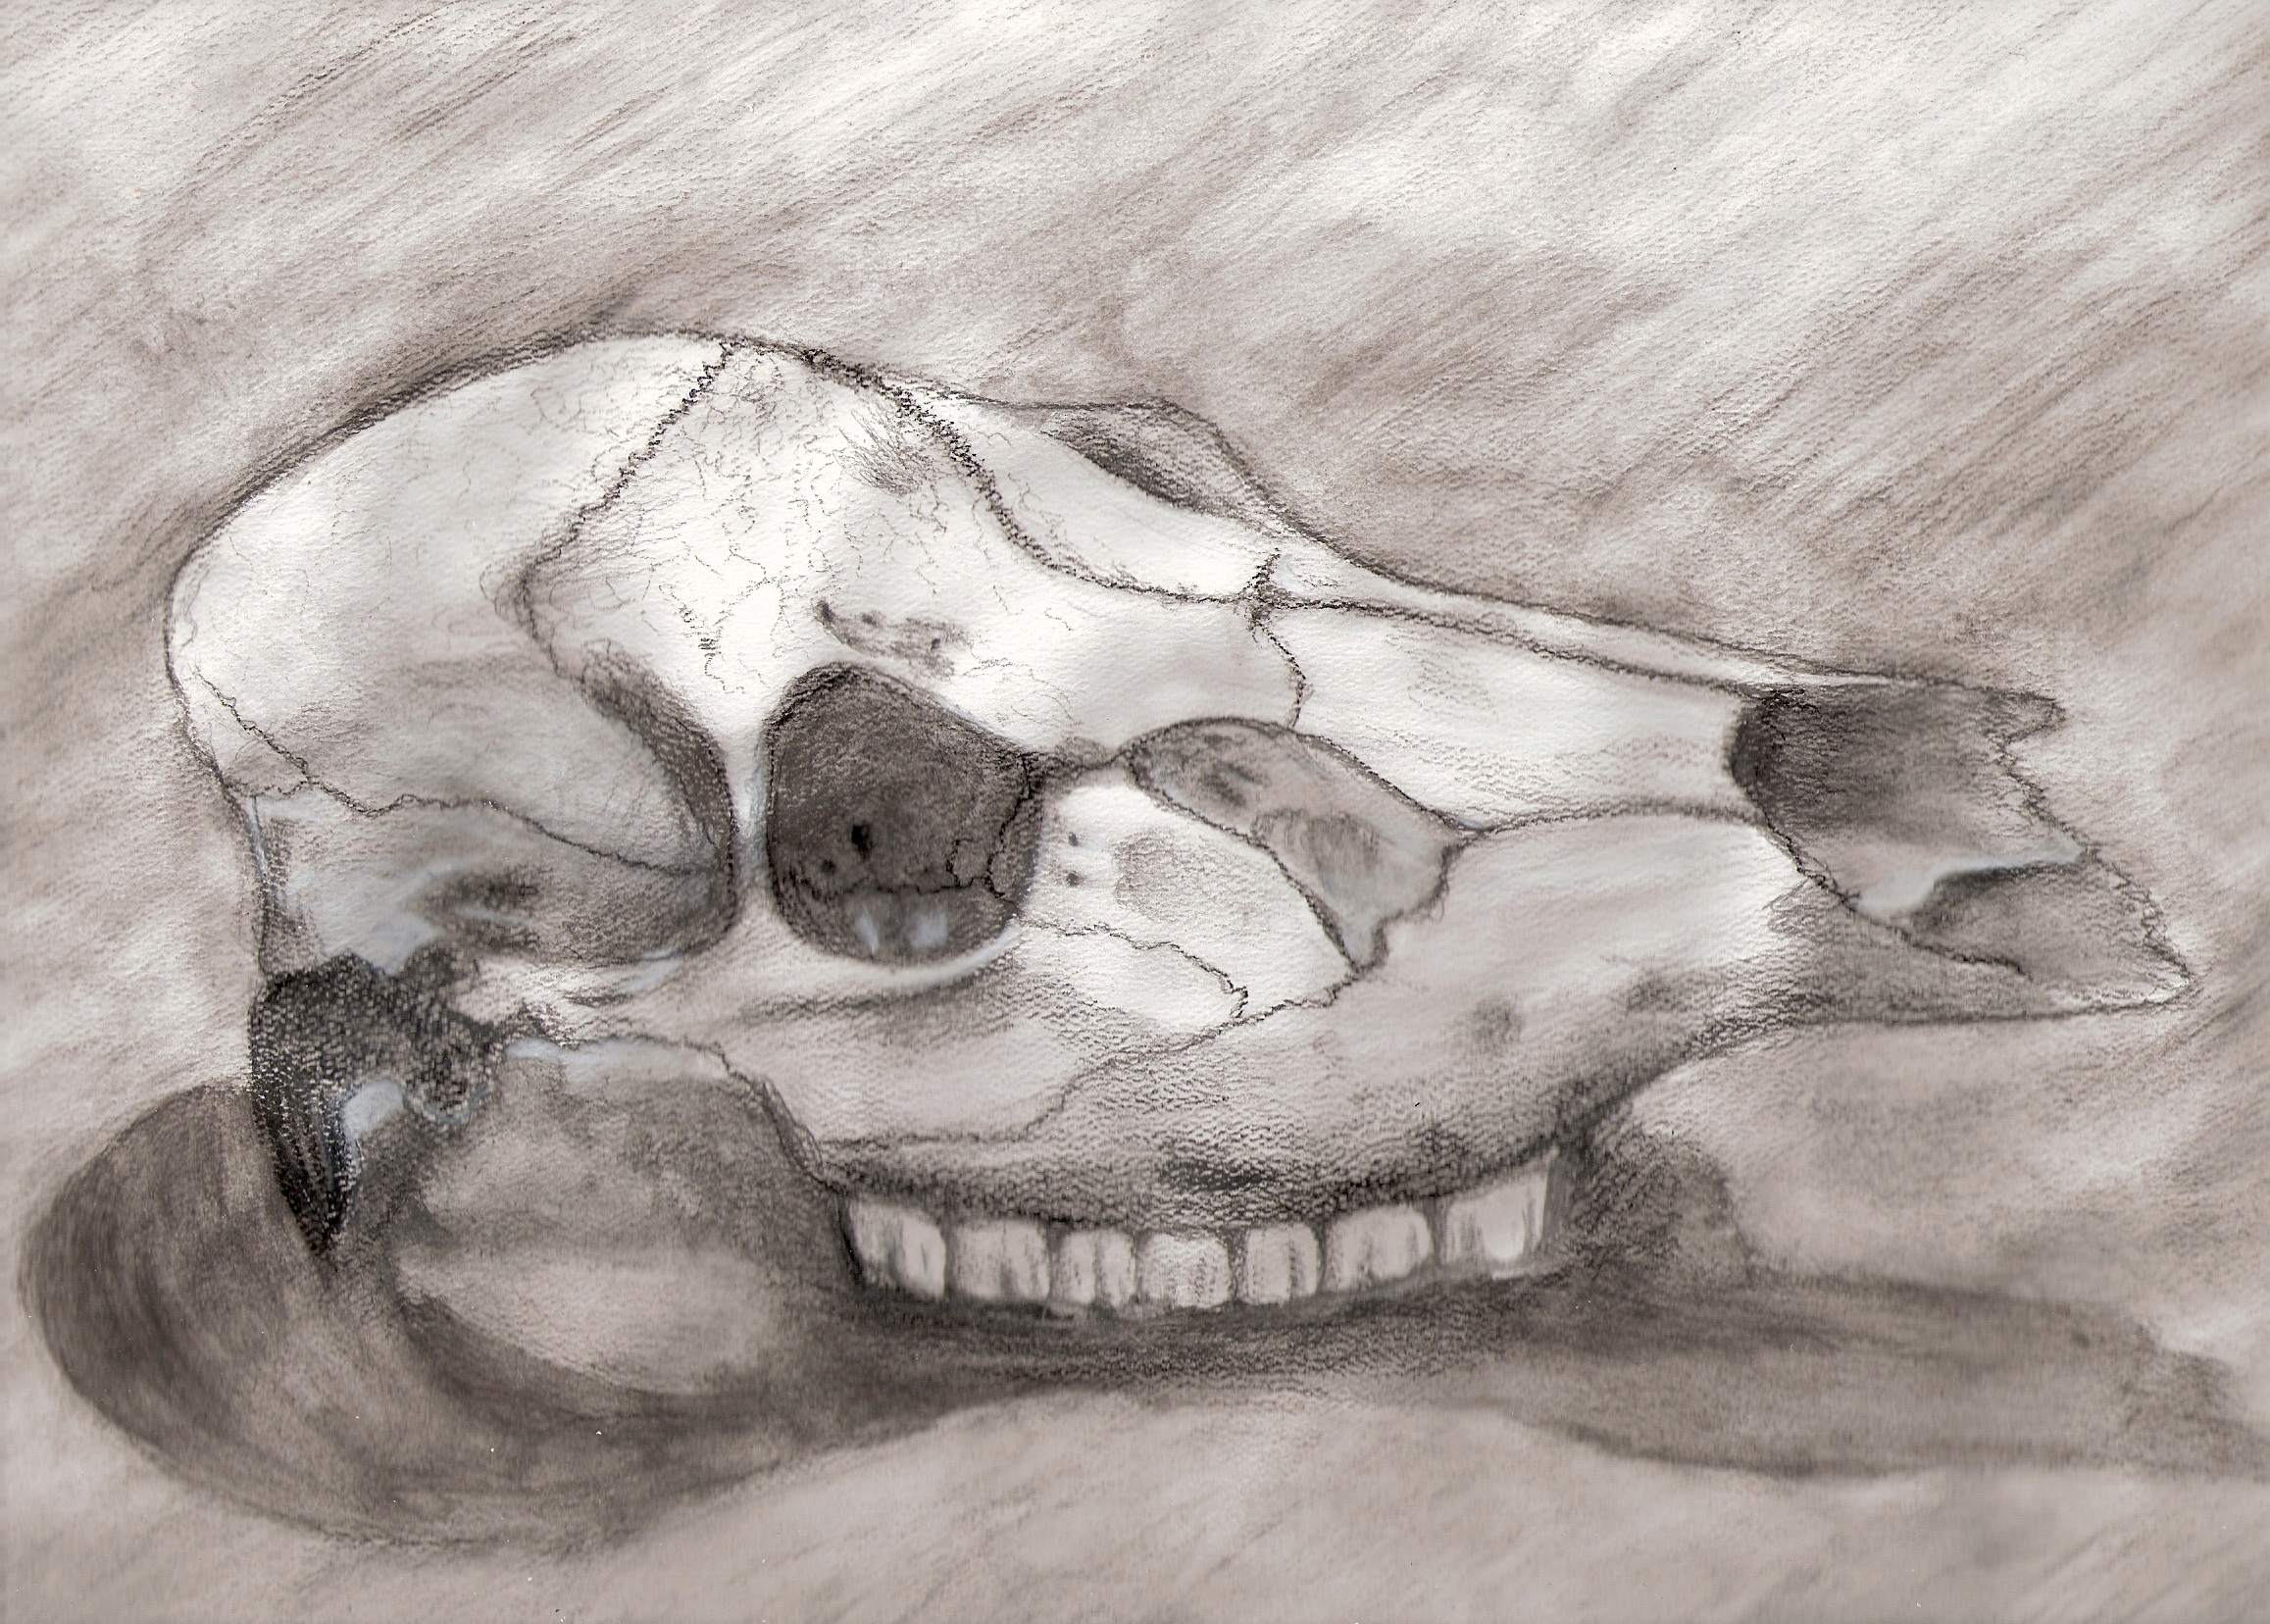 Charchoal skull